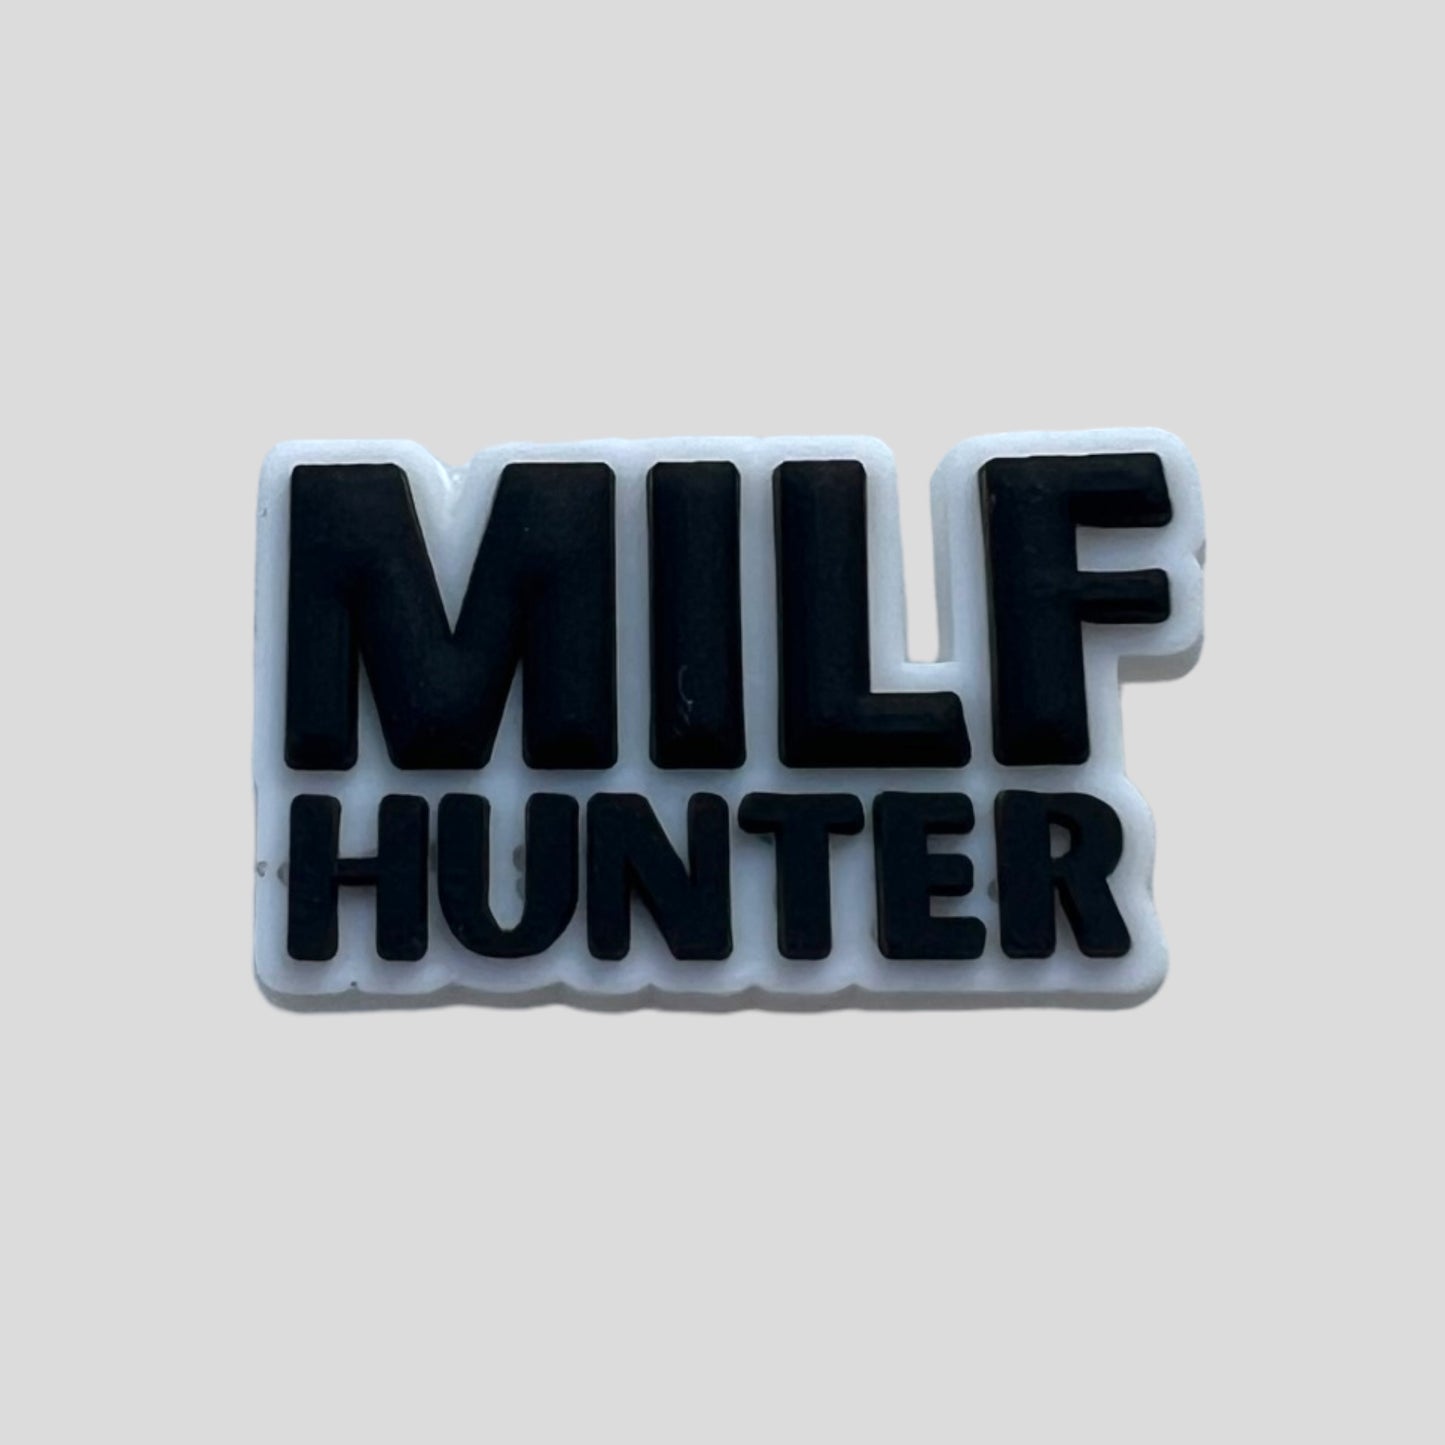 Milf Hunter | Quotes